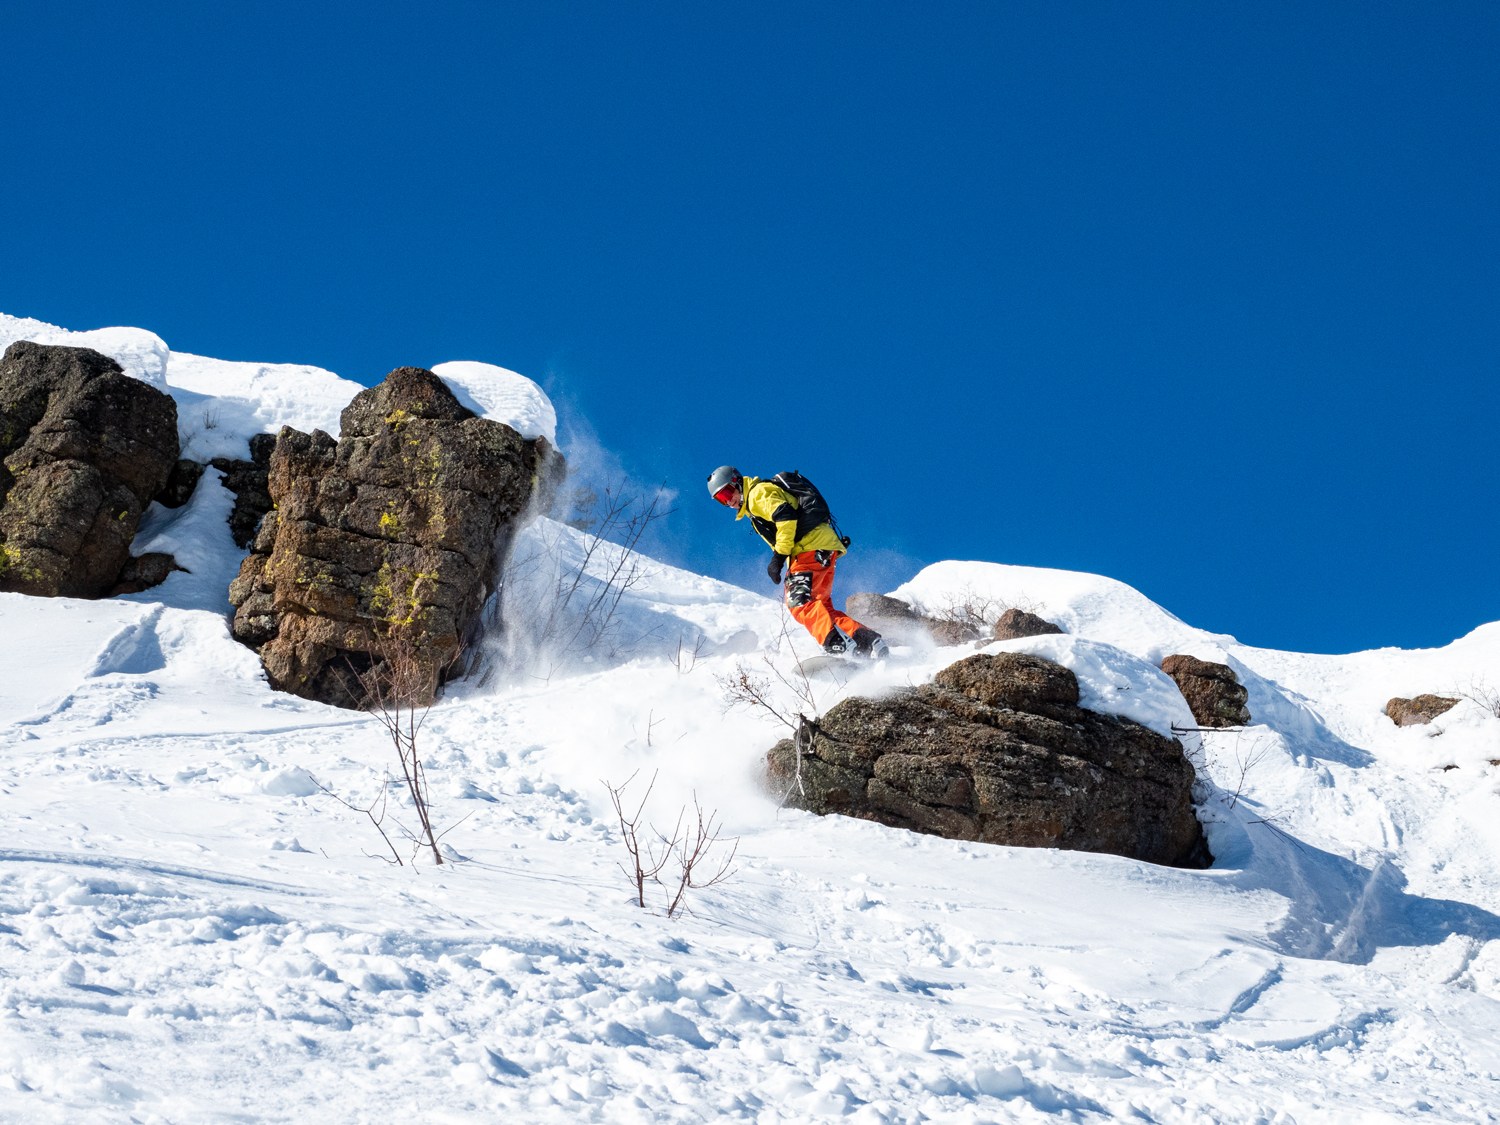 Snowboarder taking a chute at Magic Mountain Ski Resort